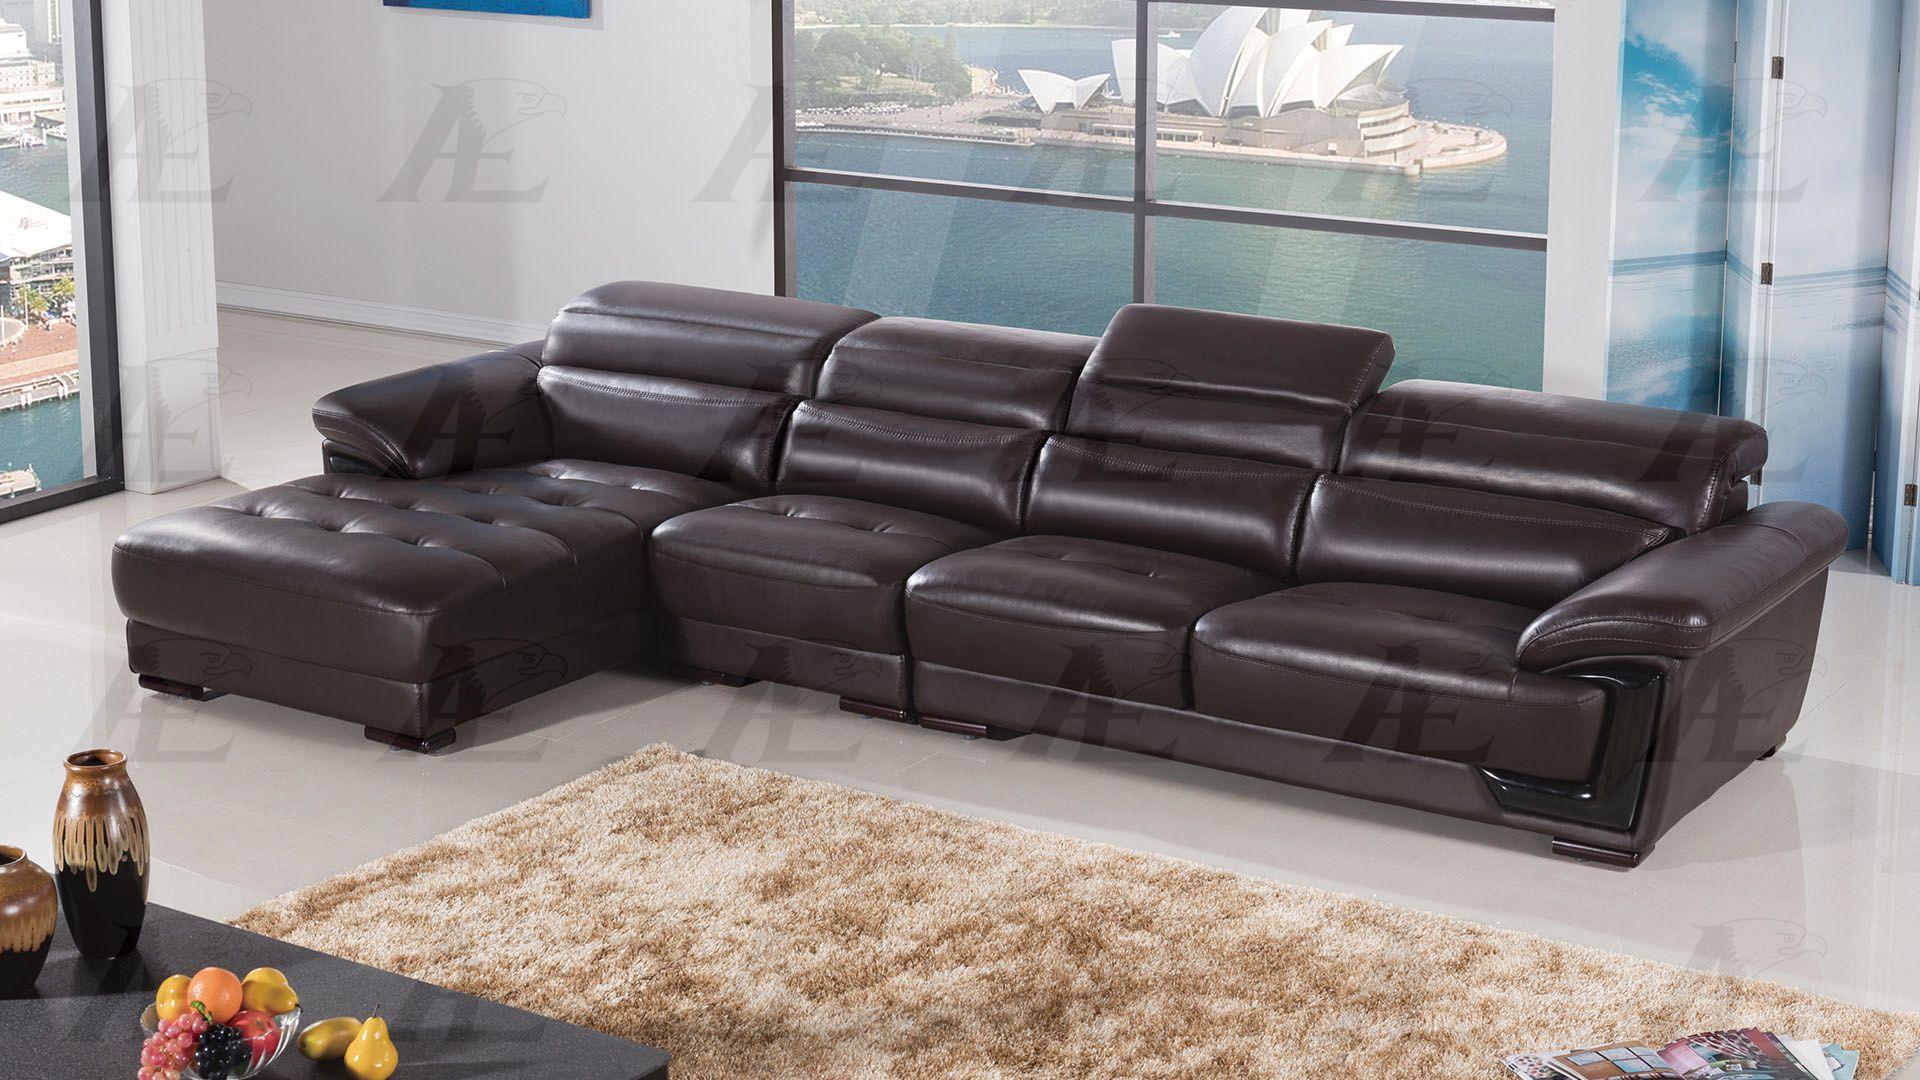 

    
American Eagle Furniture EK-LB309-DC Dark Chocolate Genuine Leather Sectional LHC 3 Pc Set
